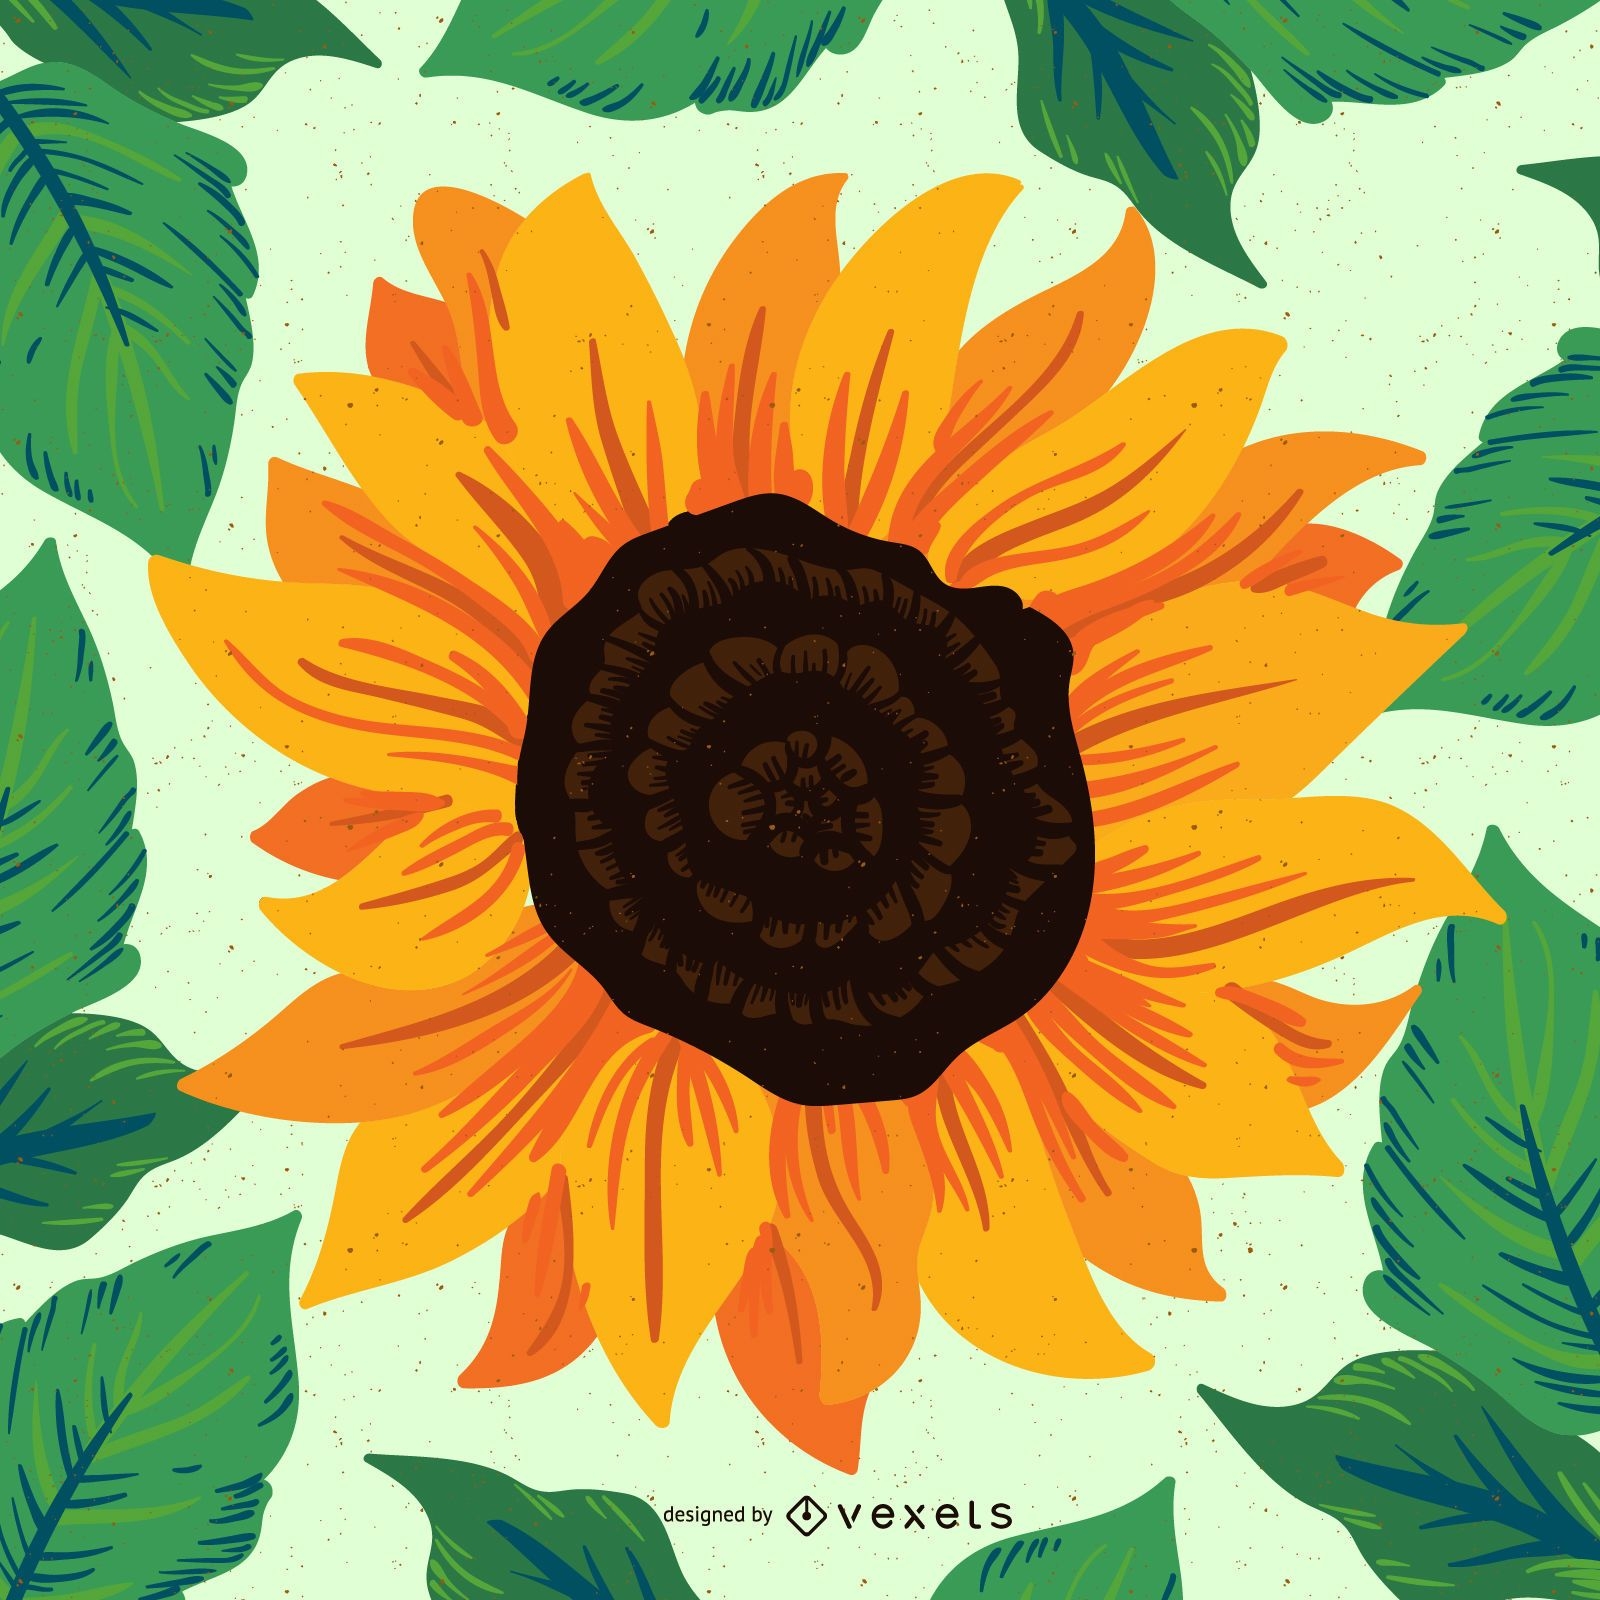 Hand drawn sunflower illustration